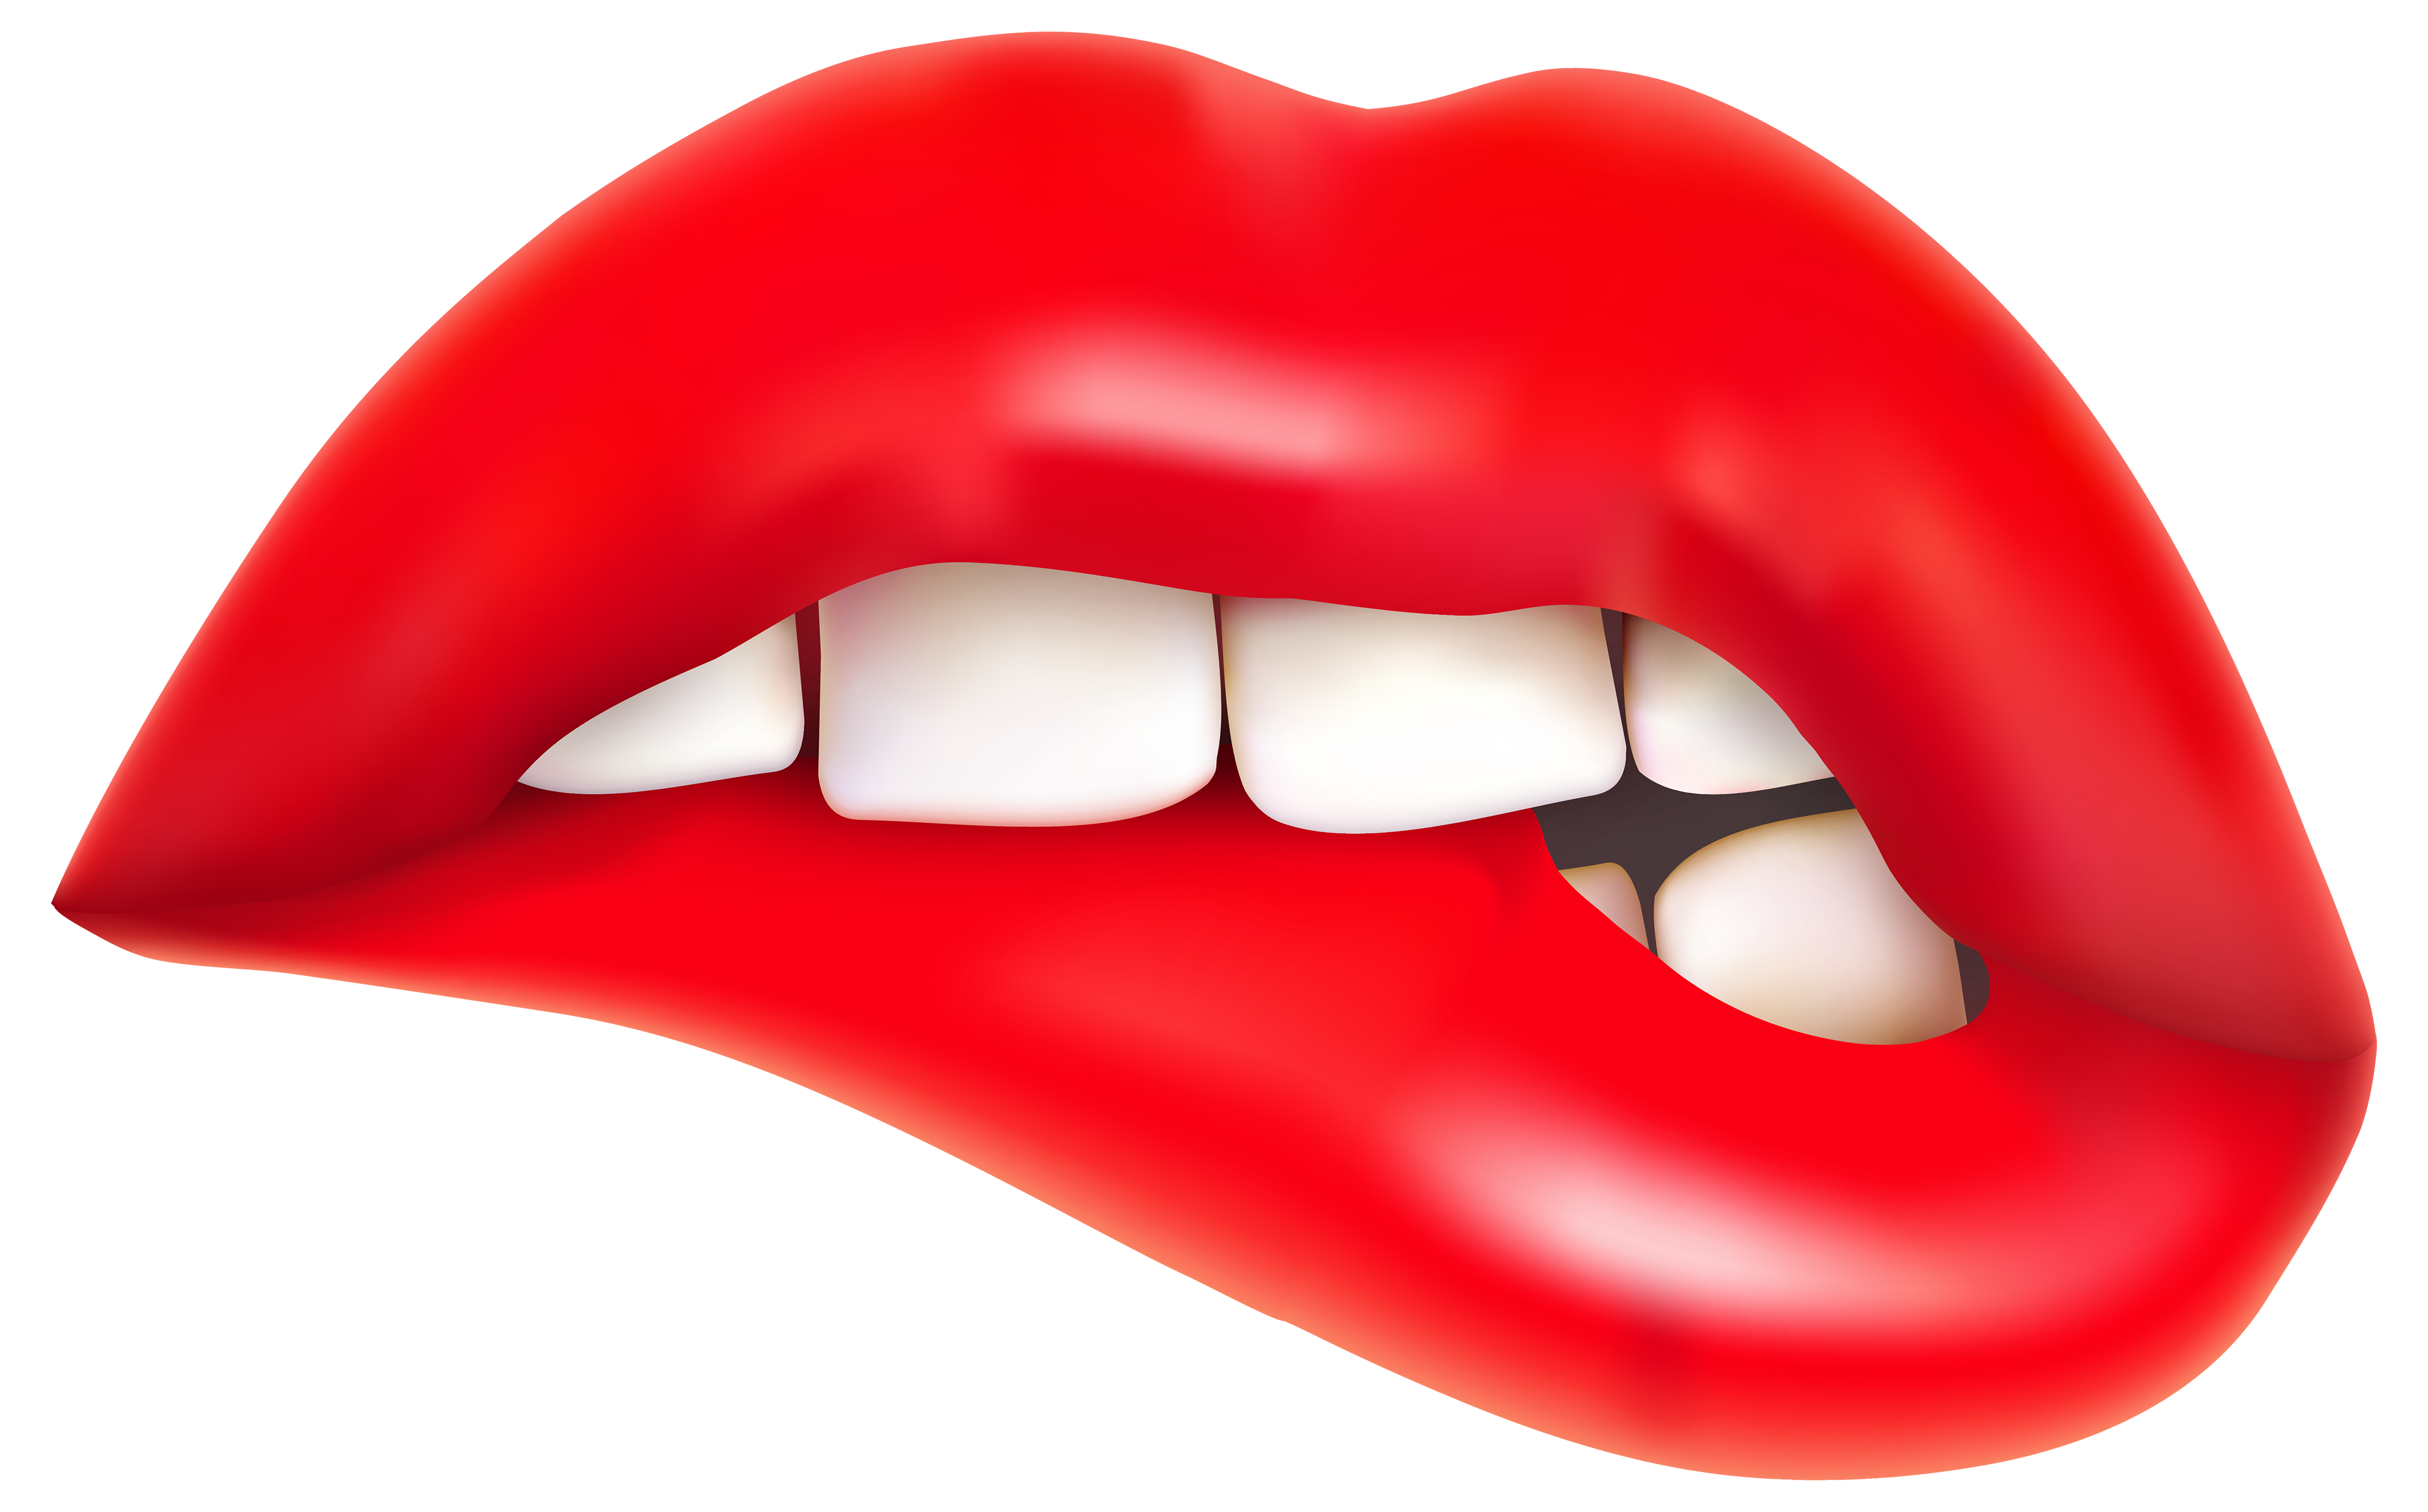 Lips clip art image